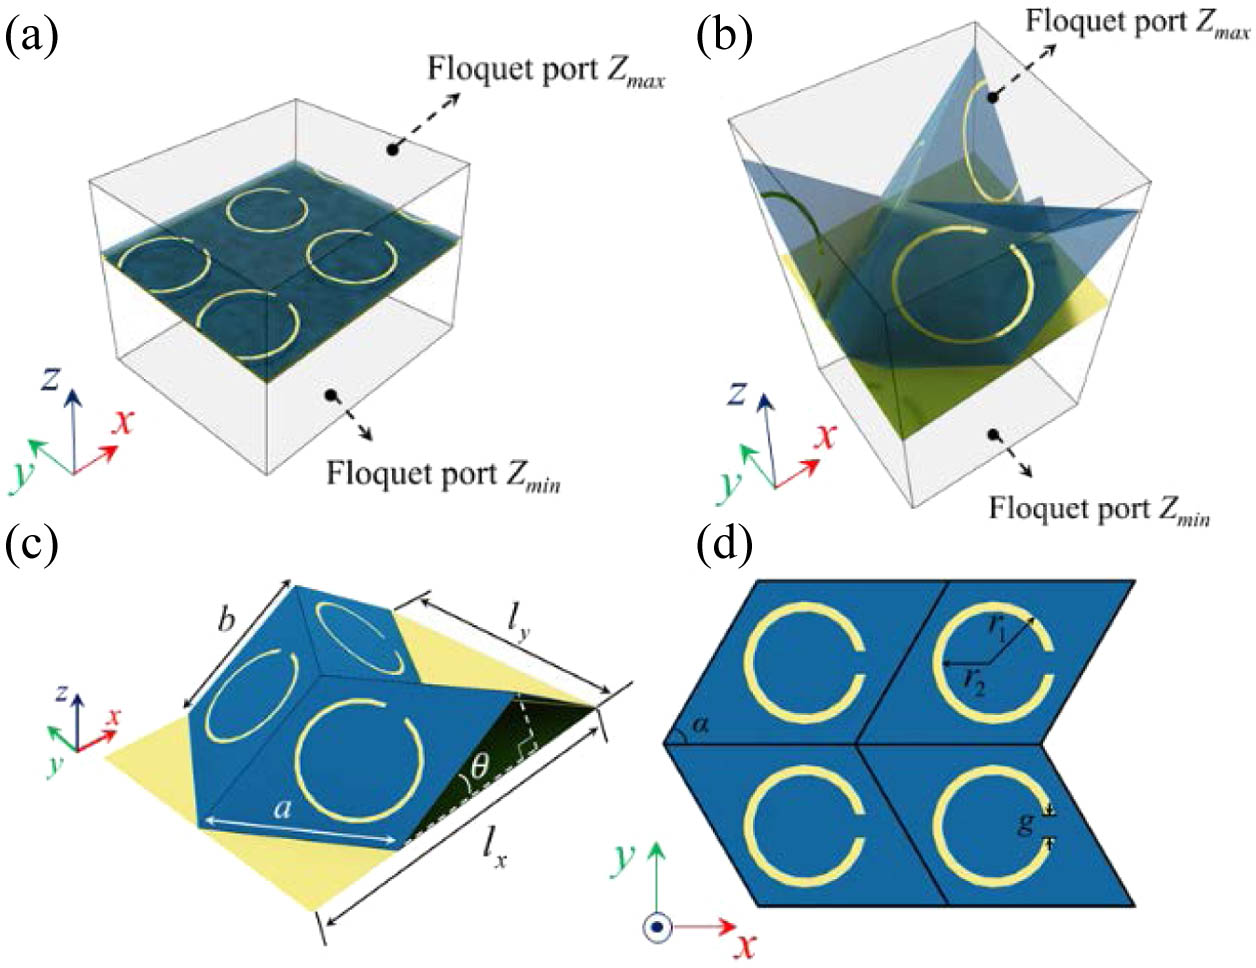 (a) Simulation setting of planar origami polarization converter (θ=0°). (b) Simulation setting of nonplanar origami polarization converter (θ≠0°). (c) Structural parameters of Miura origami substrate. (d) Dimension parameters of metallic split ring.